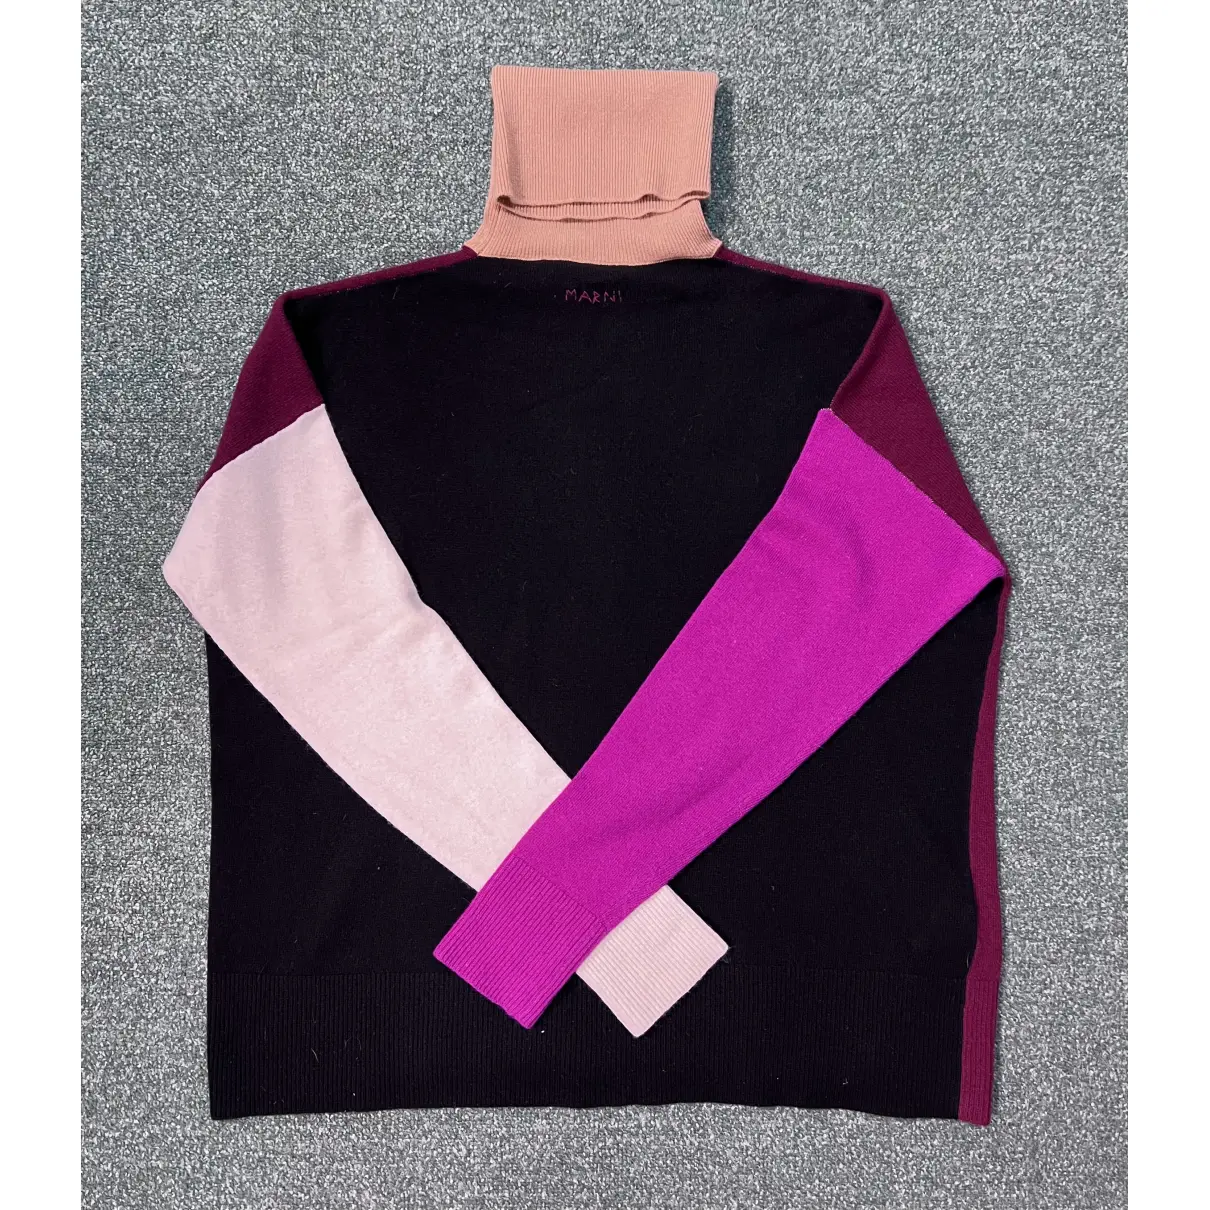 Buy Marni Wool jumper online